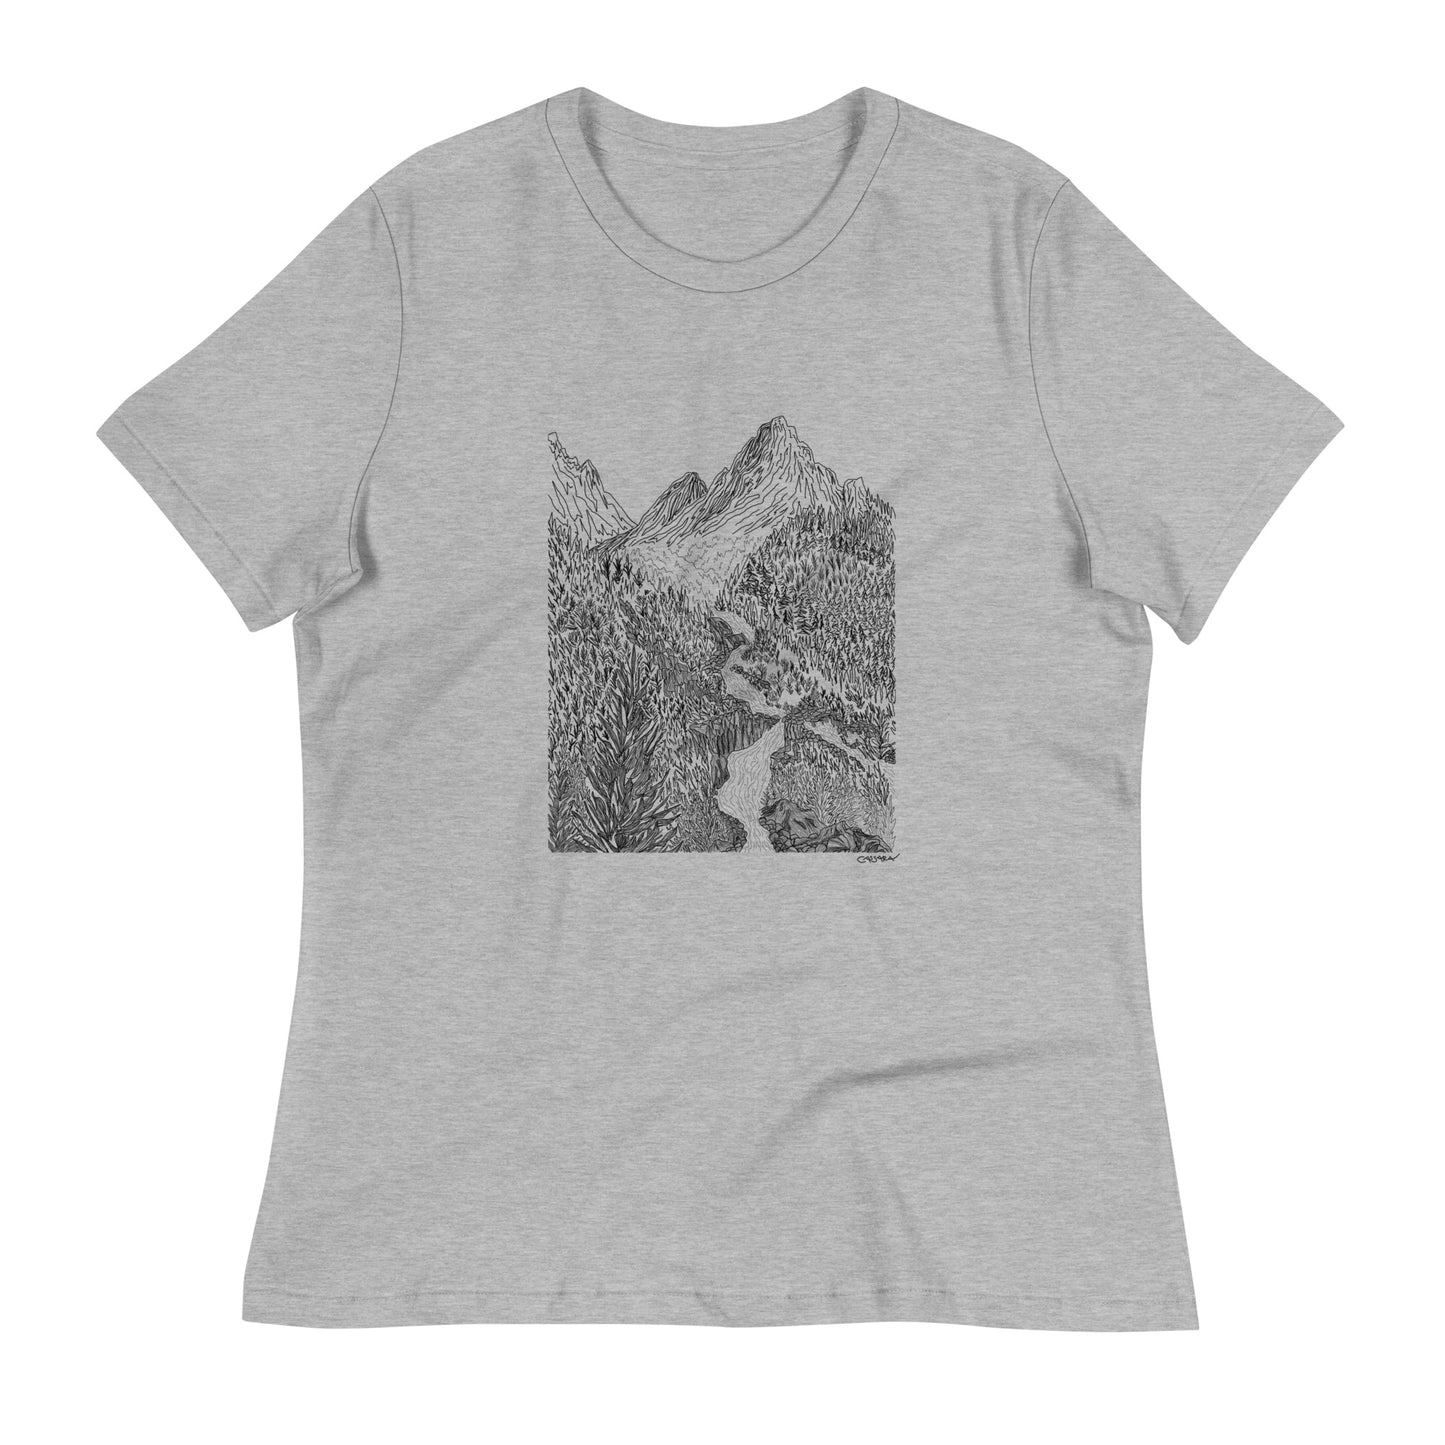 Cascading Mountain Stream T-Shirt (Women's Fit)